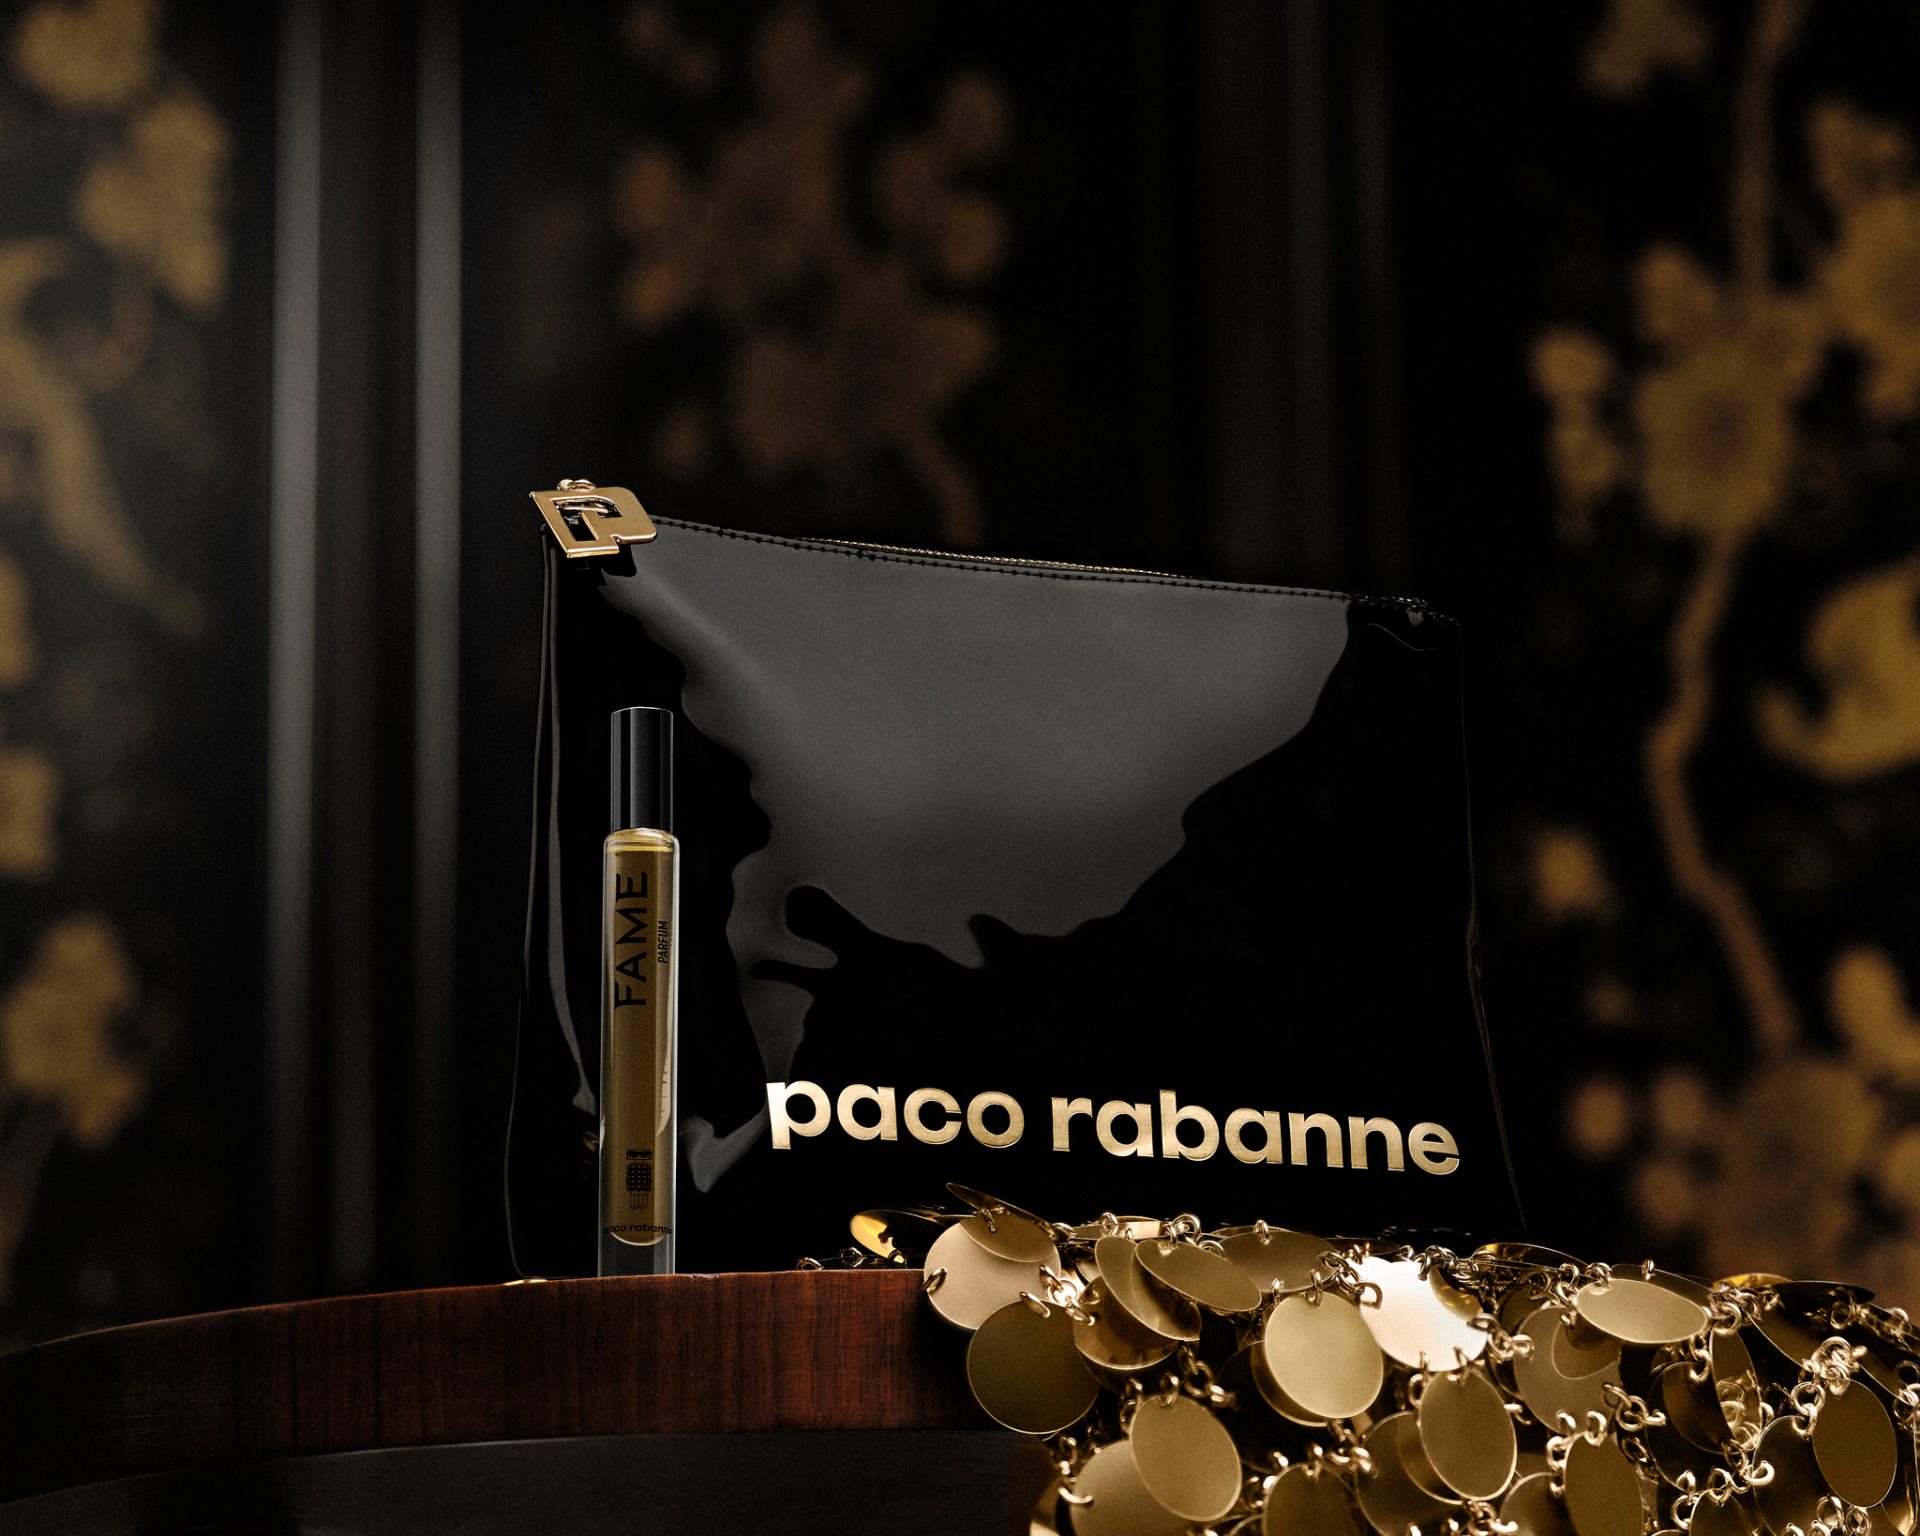 Paco rabanne Parfums Still life 6